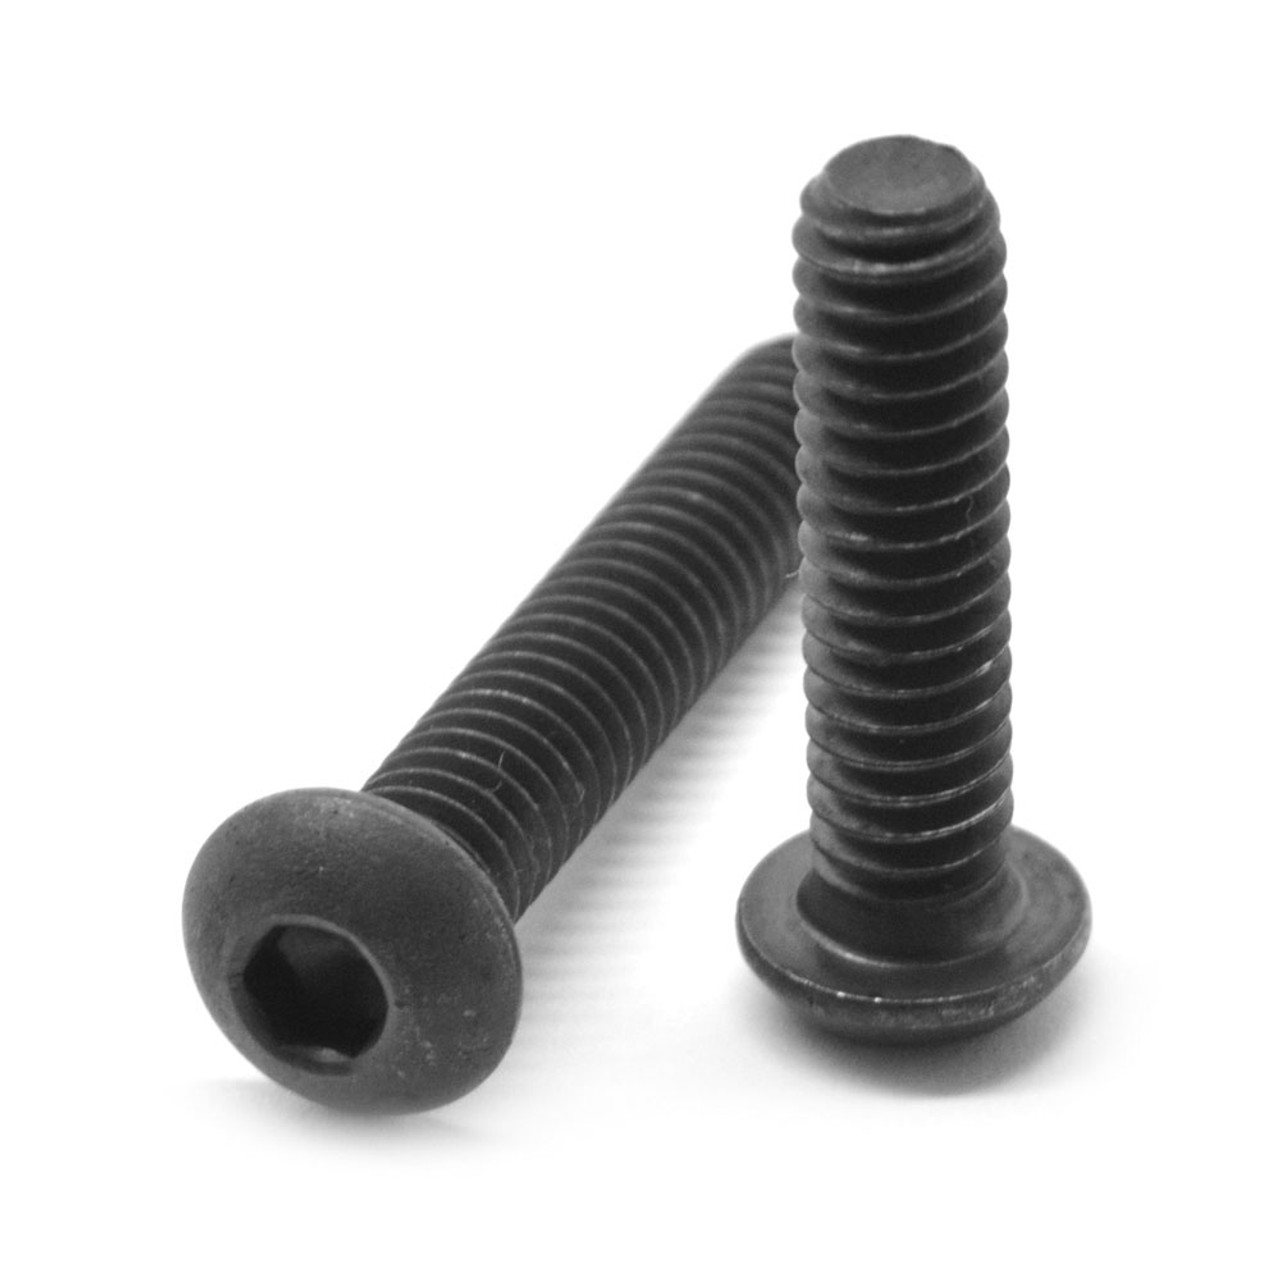 M3 x 0.50 x 12 MM (FT) Coarse Thread ISO 7380 Class 10.9 Socket Button Head Cap Screw Alloy Steel Black Oxide